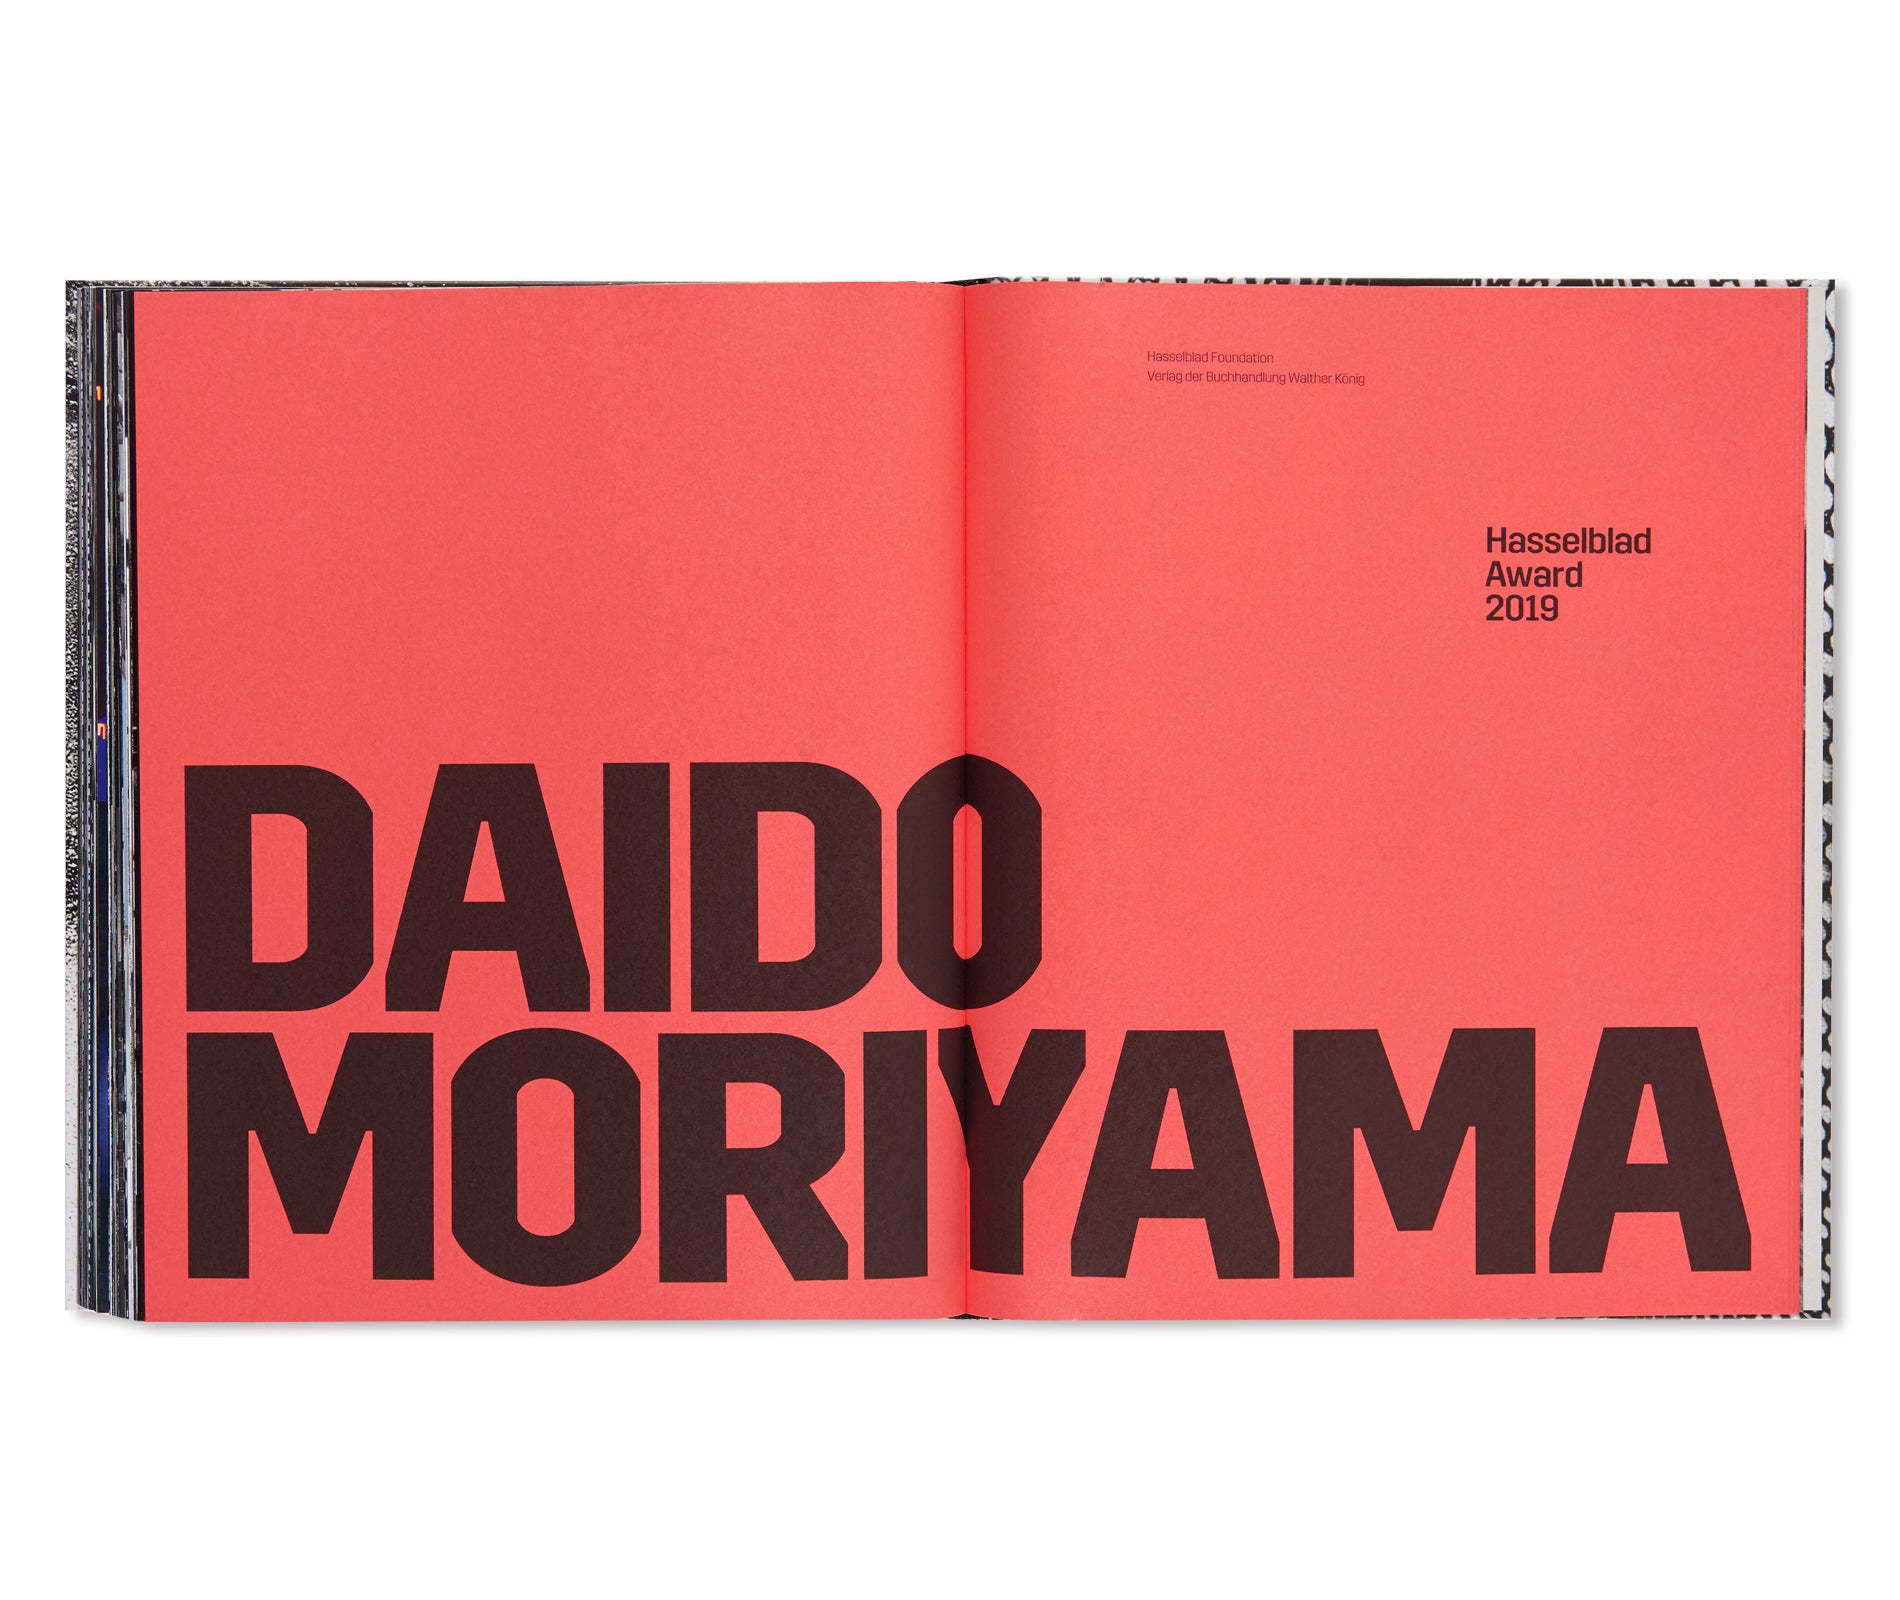 A DIARY - HASSELBLAD AWARD 2019 by Daido Moriyama